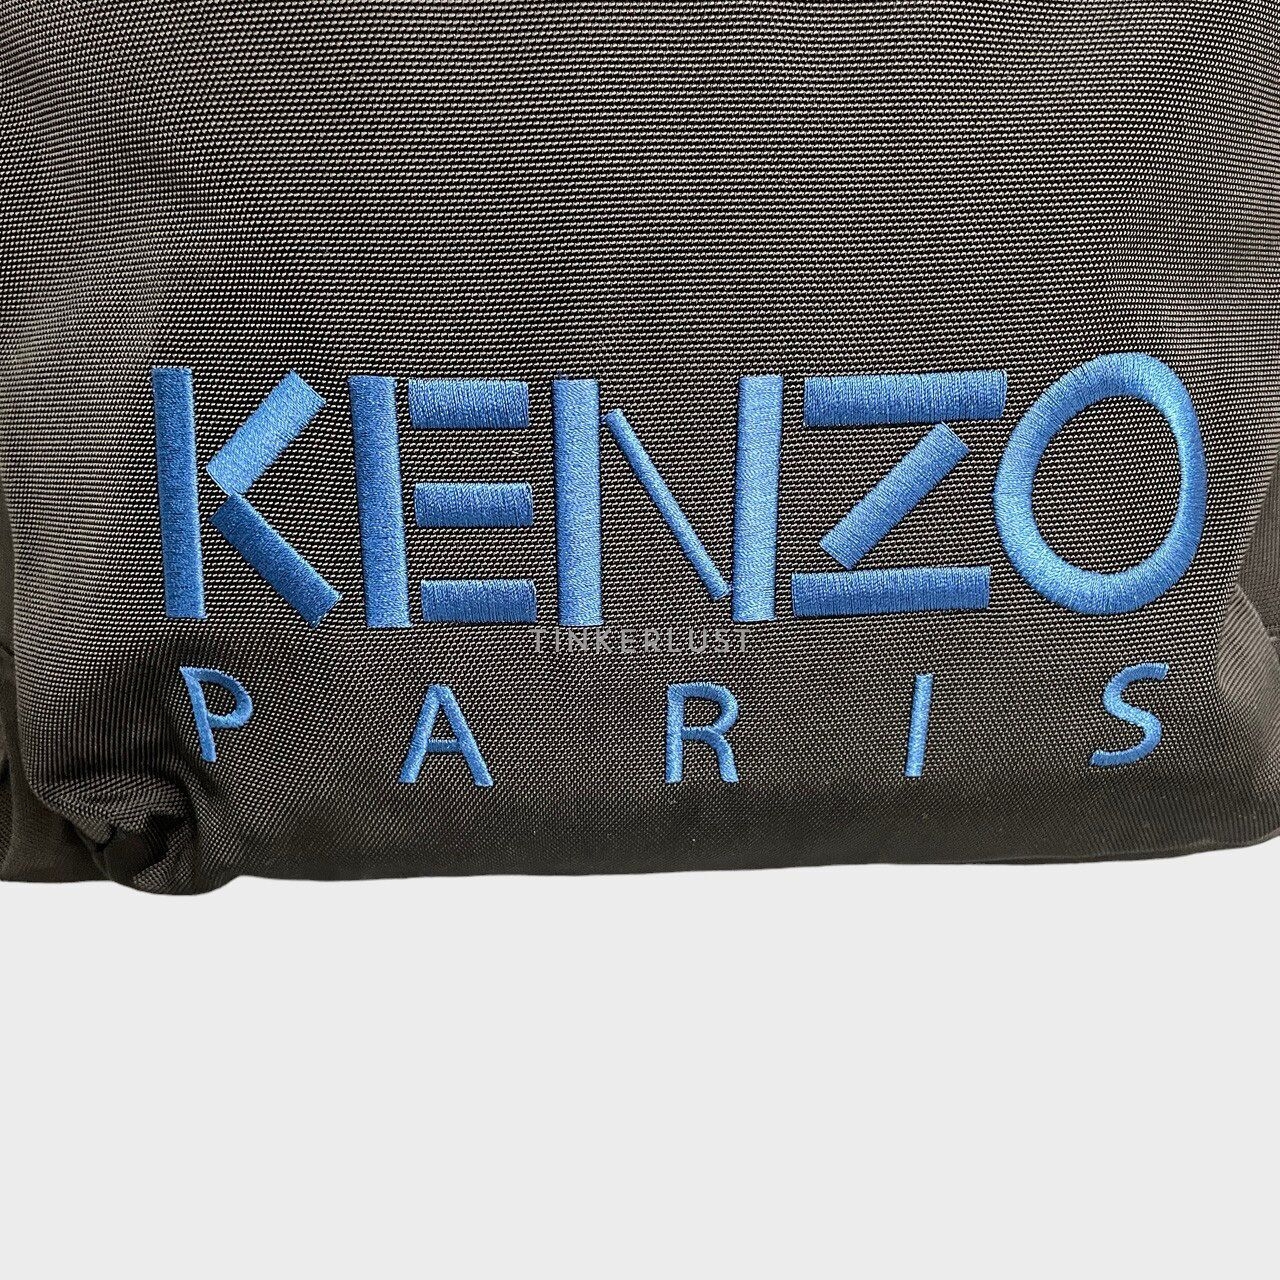 Kenzo Black & Blue Tiger Canvas Embroidered Backpack